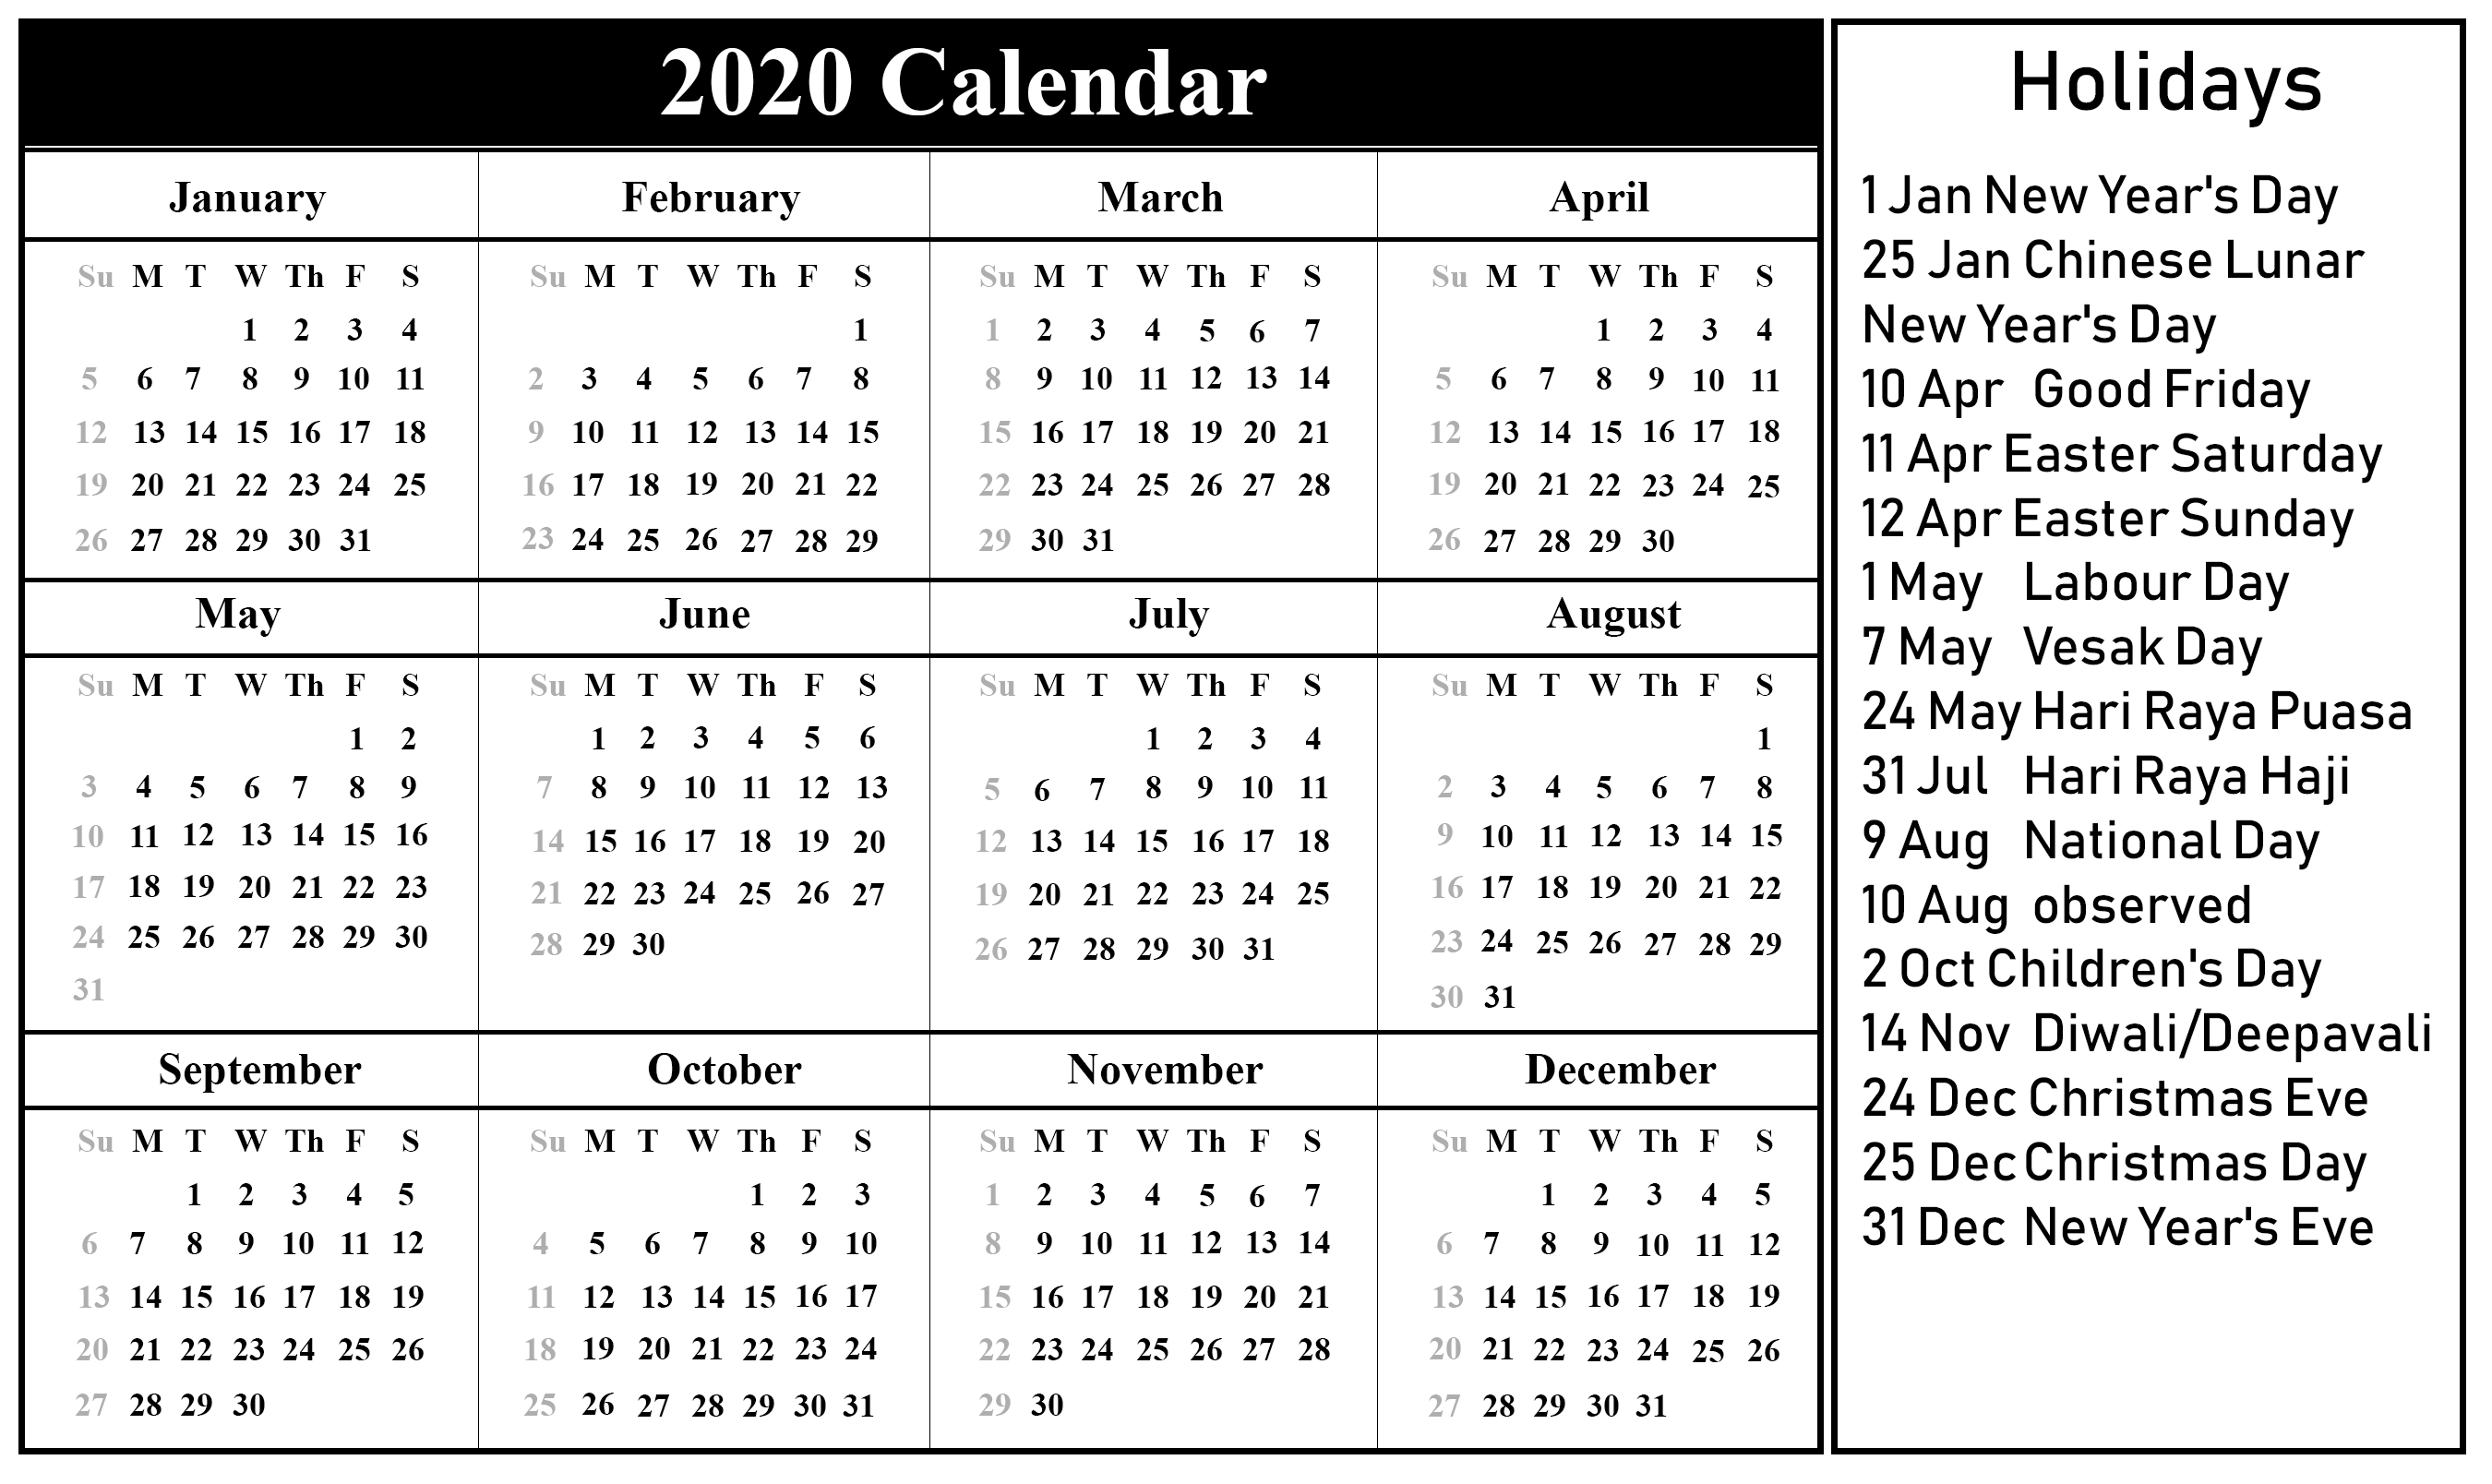 Free Printable Singapore 2020 Calendar With Holidays In Pdf-National Food Holidays 2020 Printable